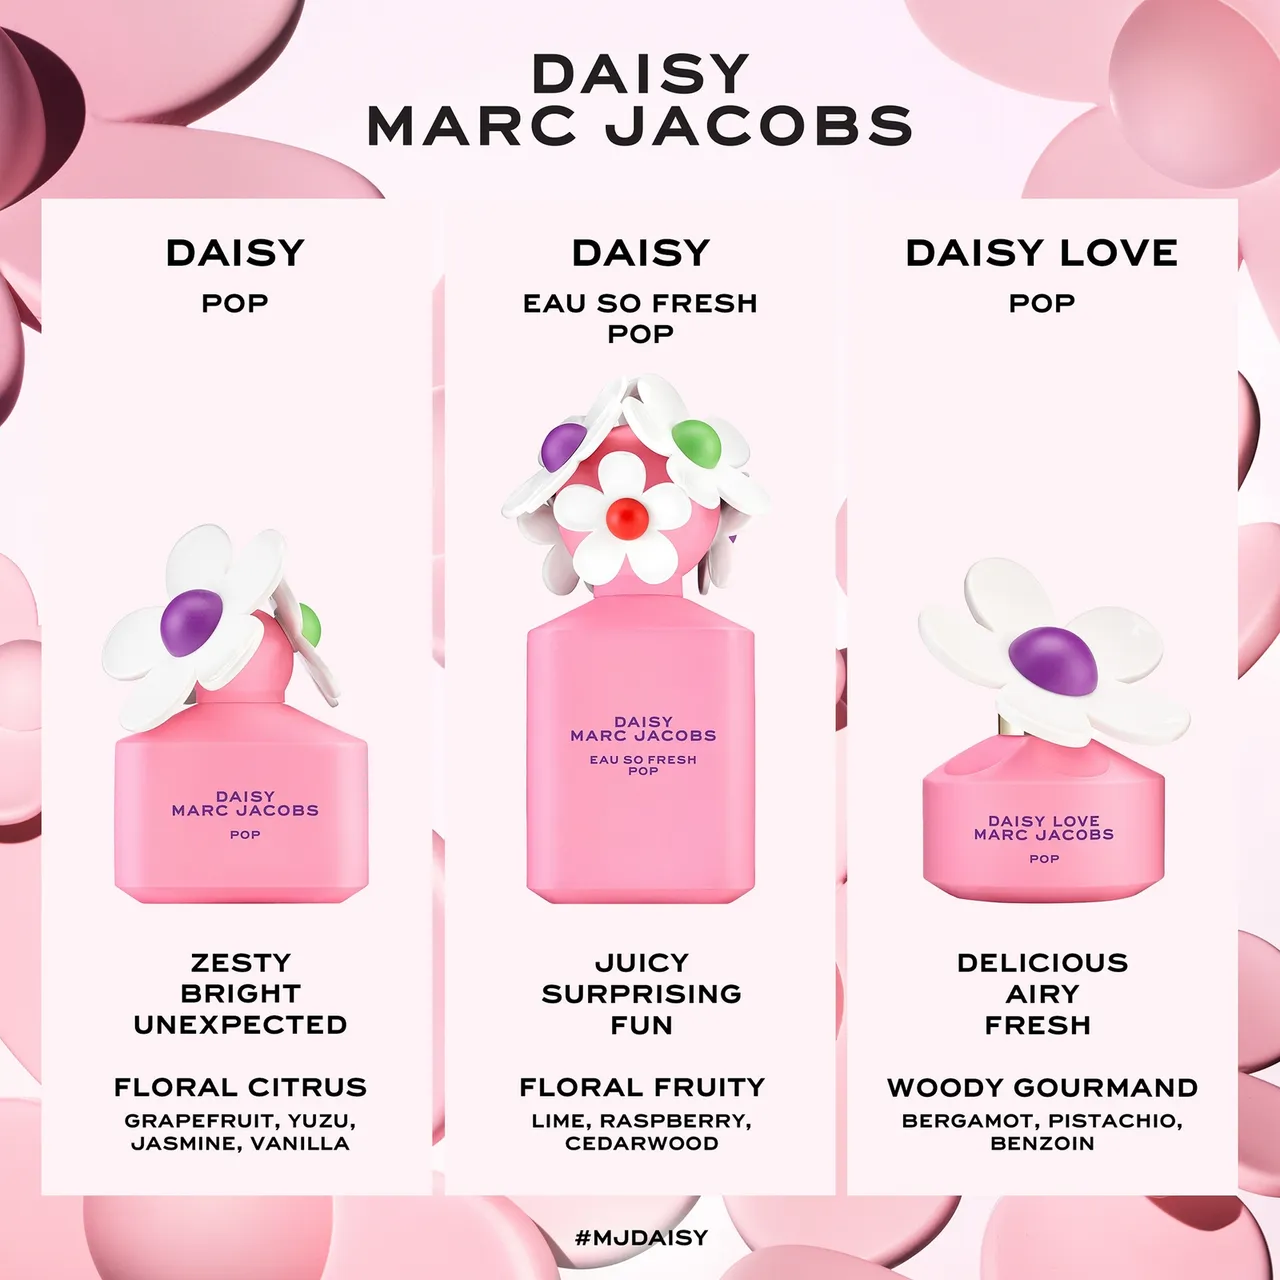 Marc Jacobs Daisy Pop for Women 50ml